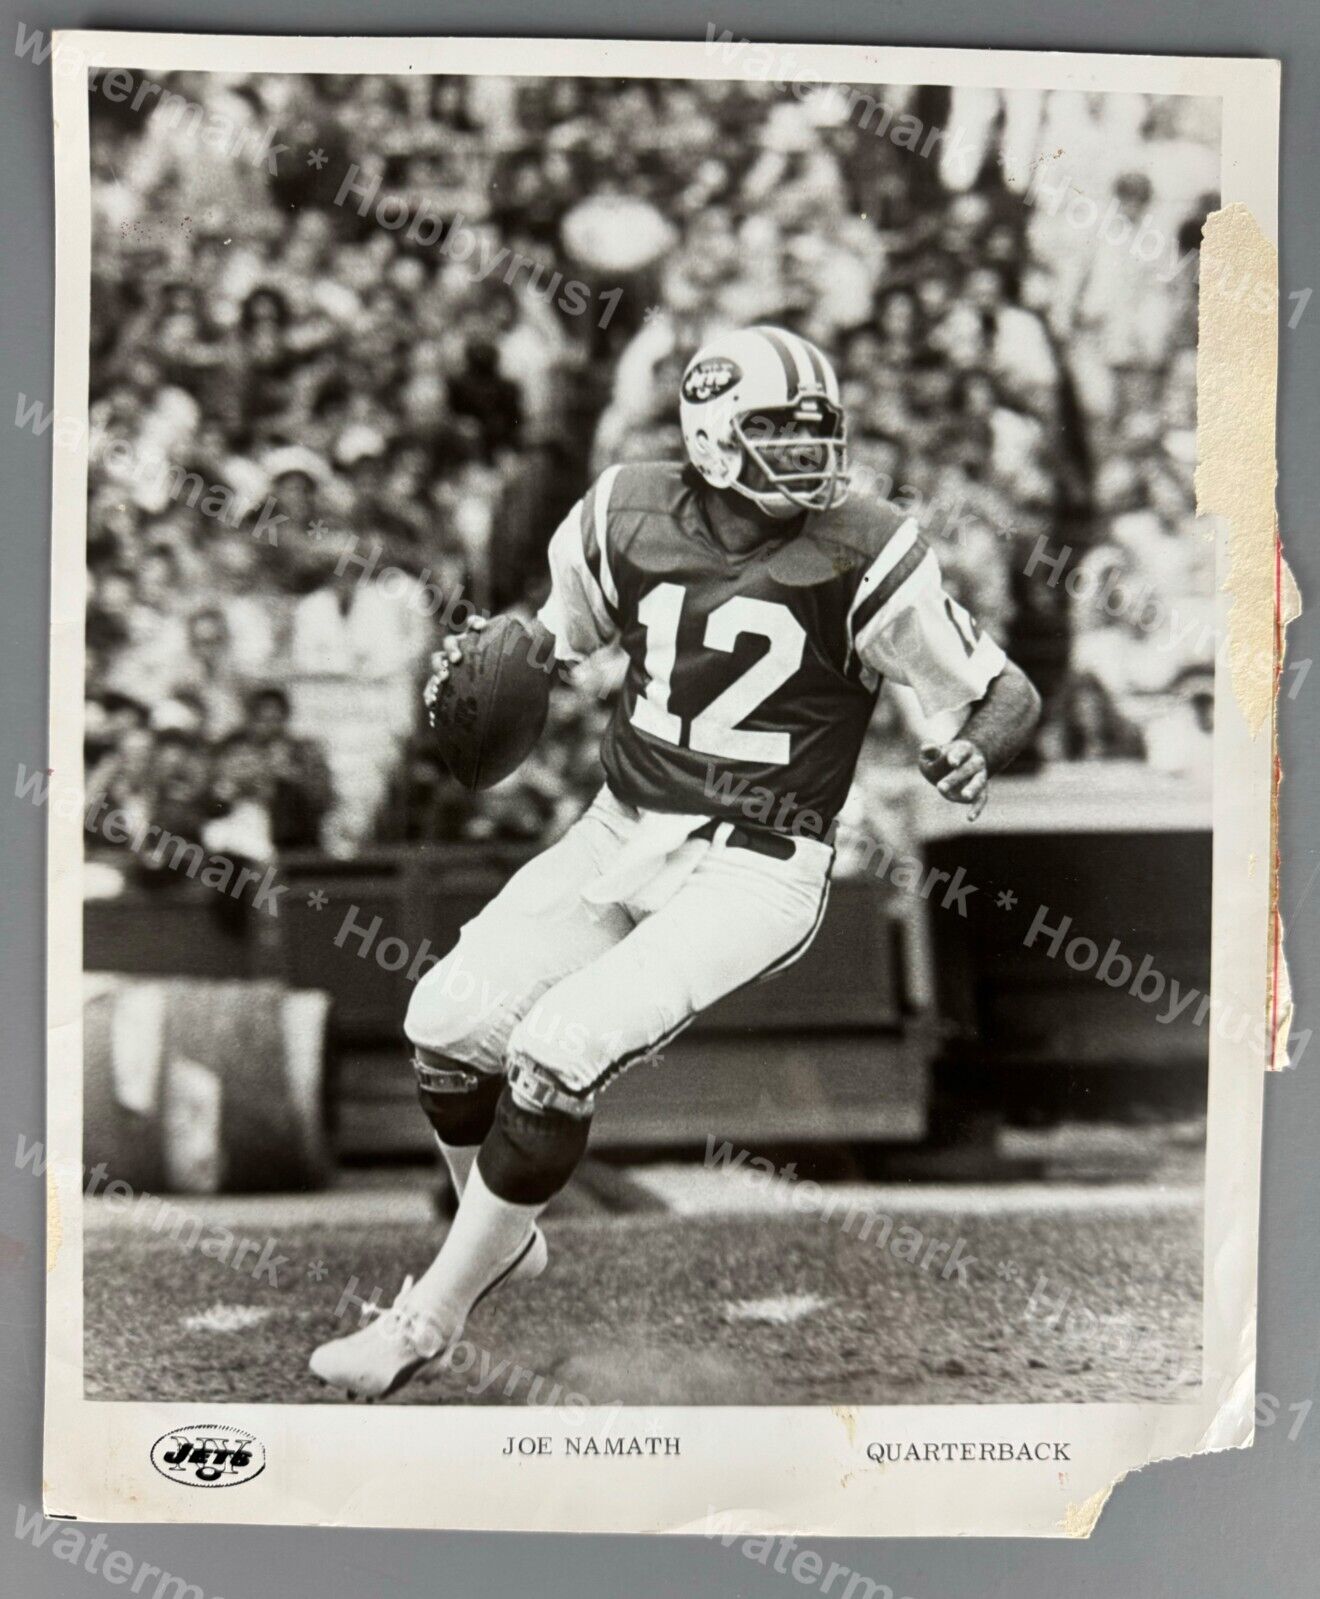 JOE NAMATH New York Jets Quarterback Vintage NFL Original Promo Photo